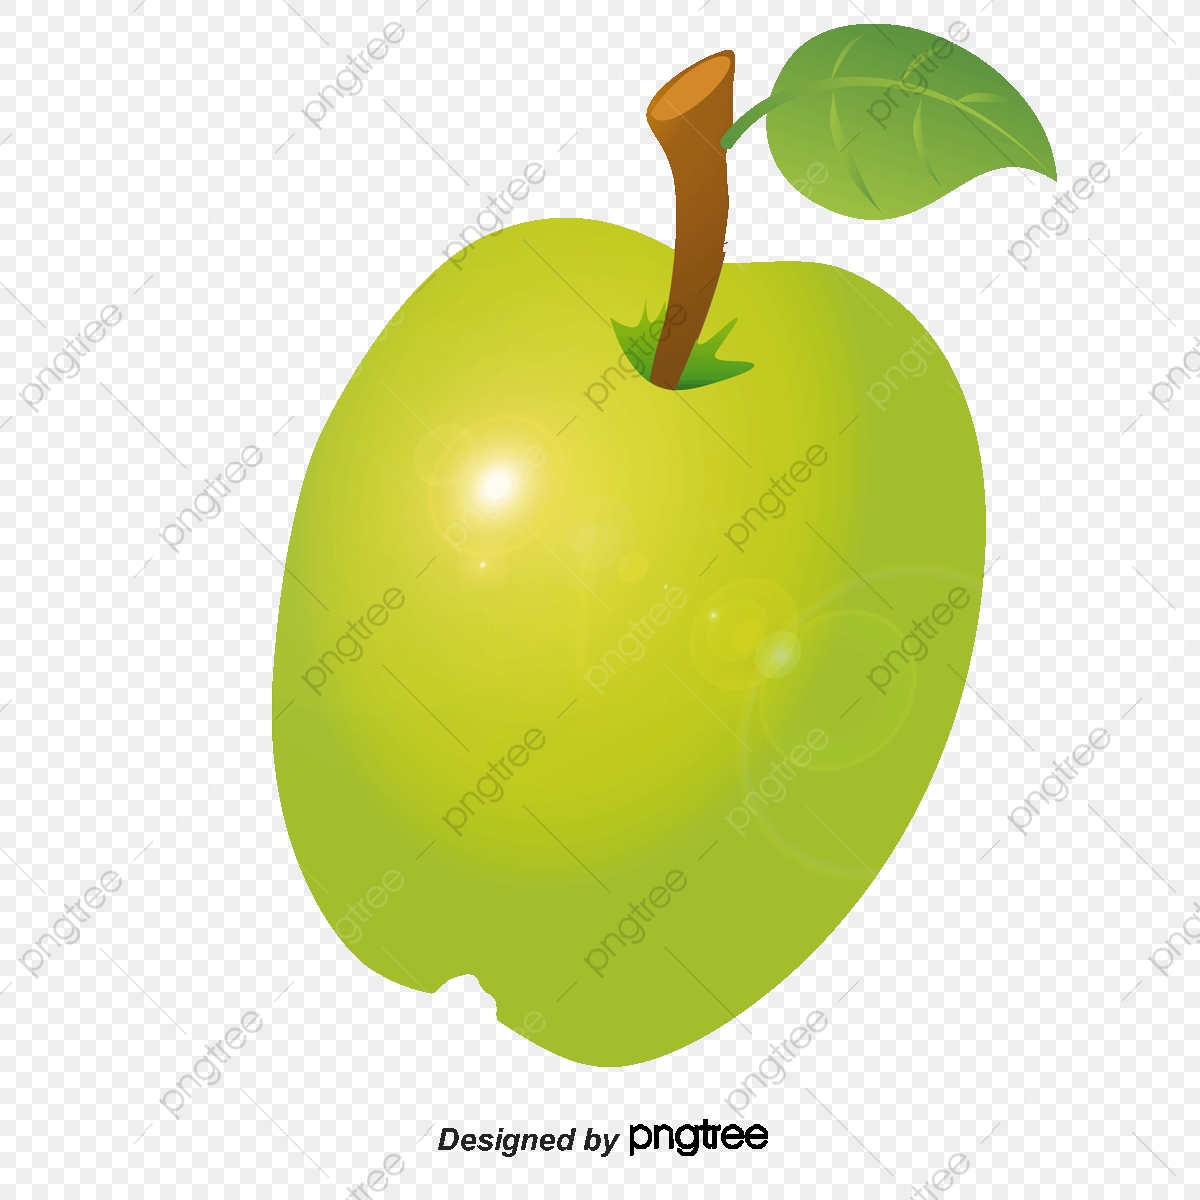 green apple sketch